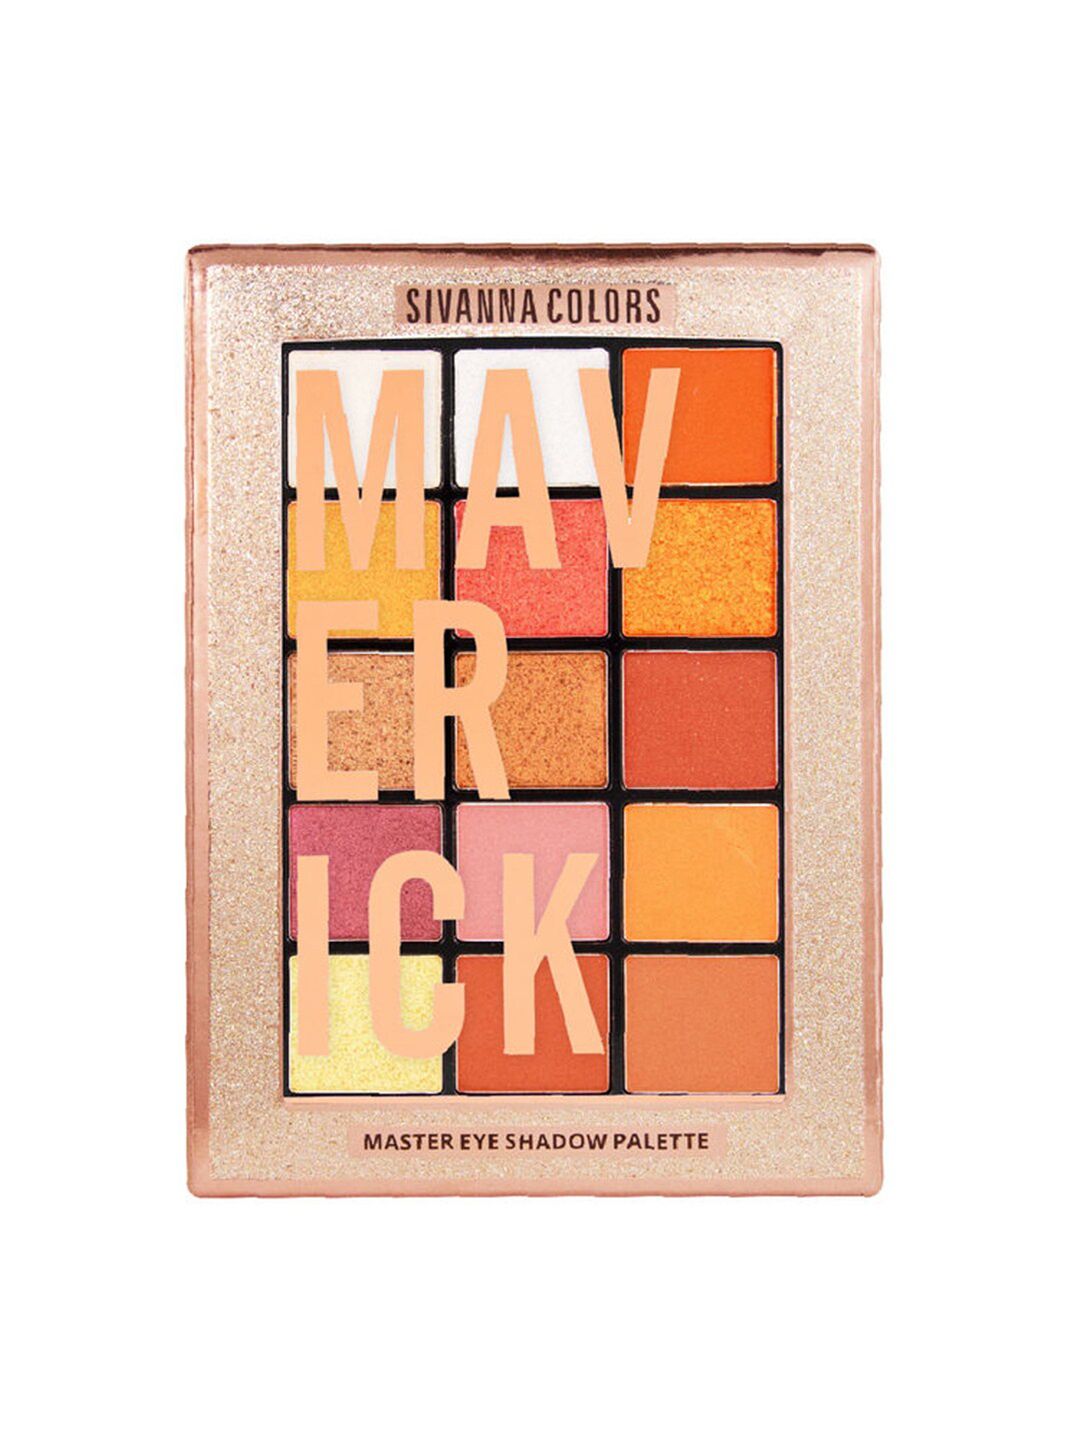 Sivanna Colors Maverick Eye Shadow Palette - HF5026 01 Price in India